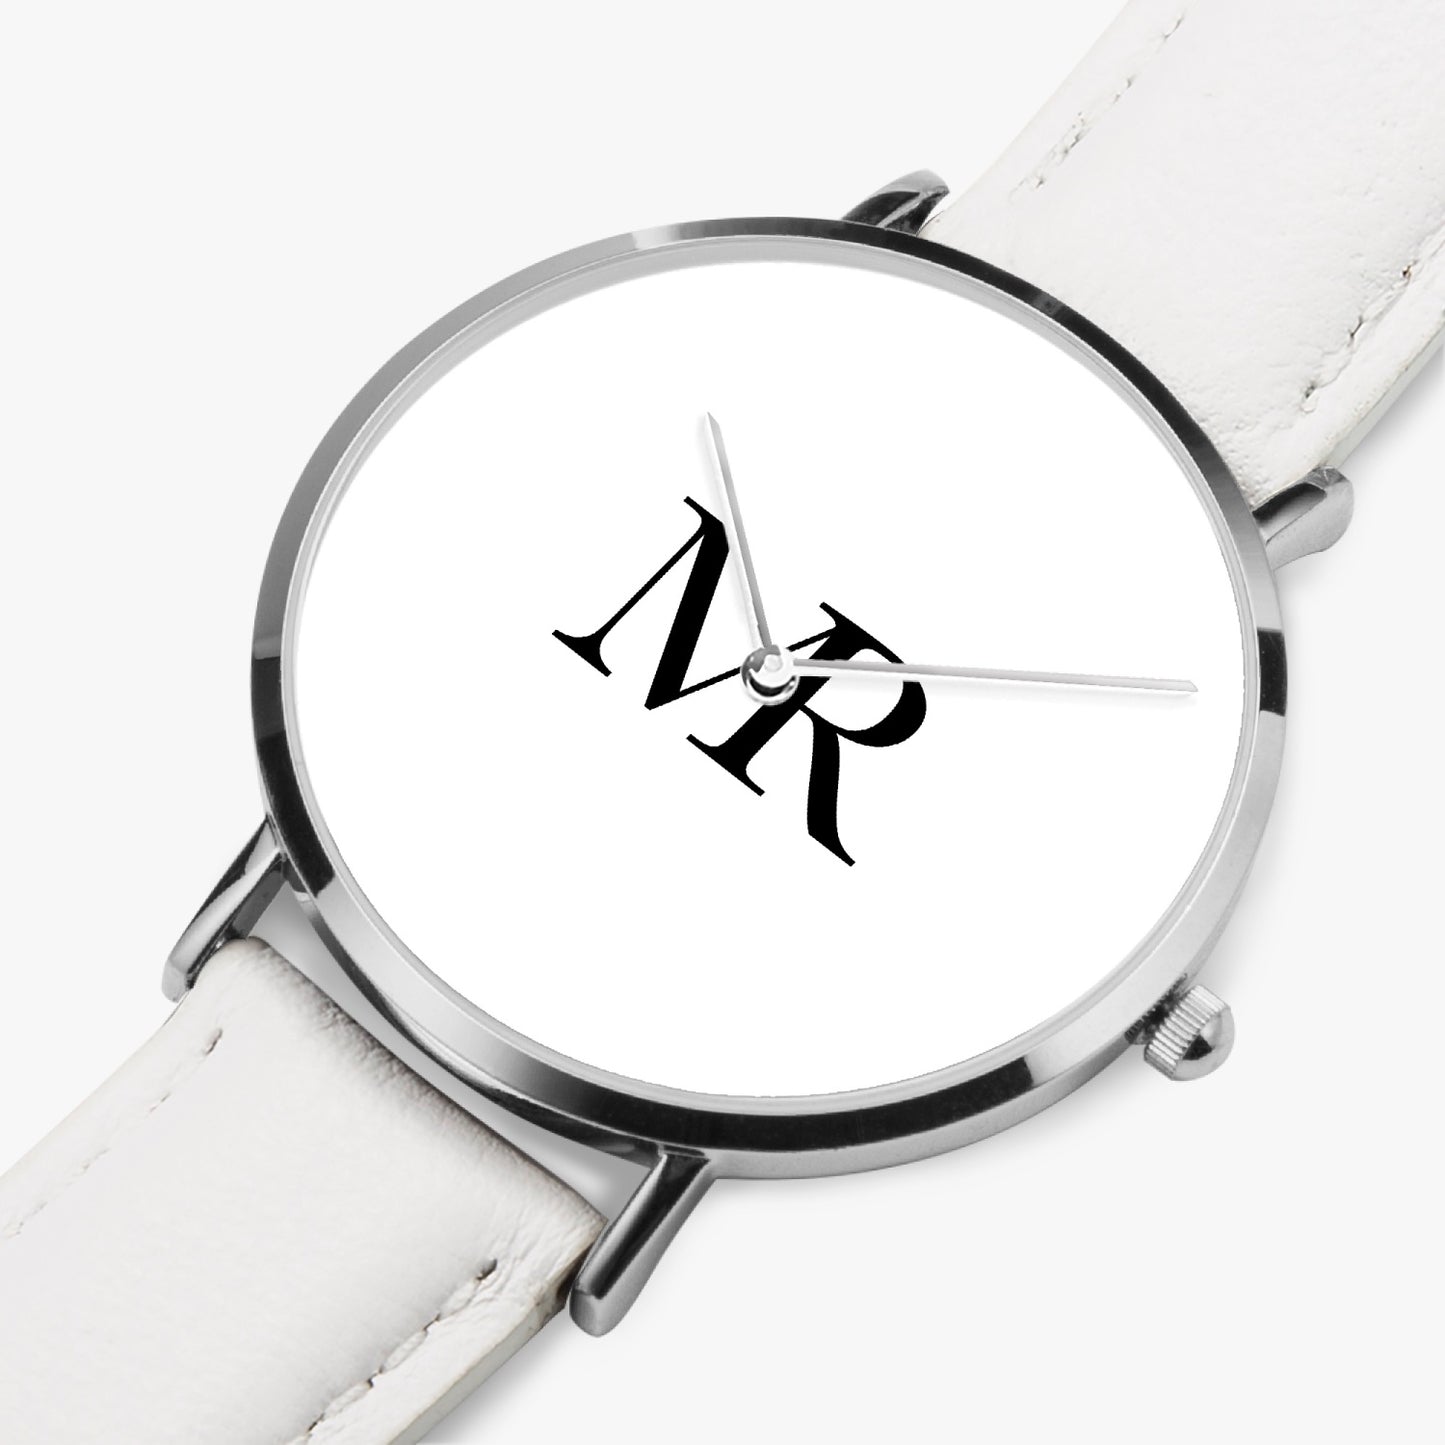 MRLabel Ultra-Thin Leather Strap Watch